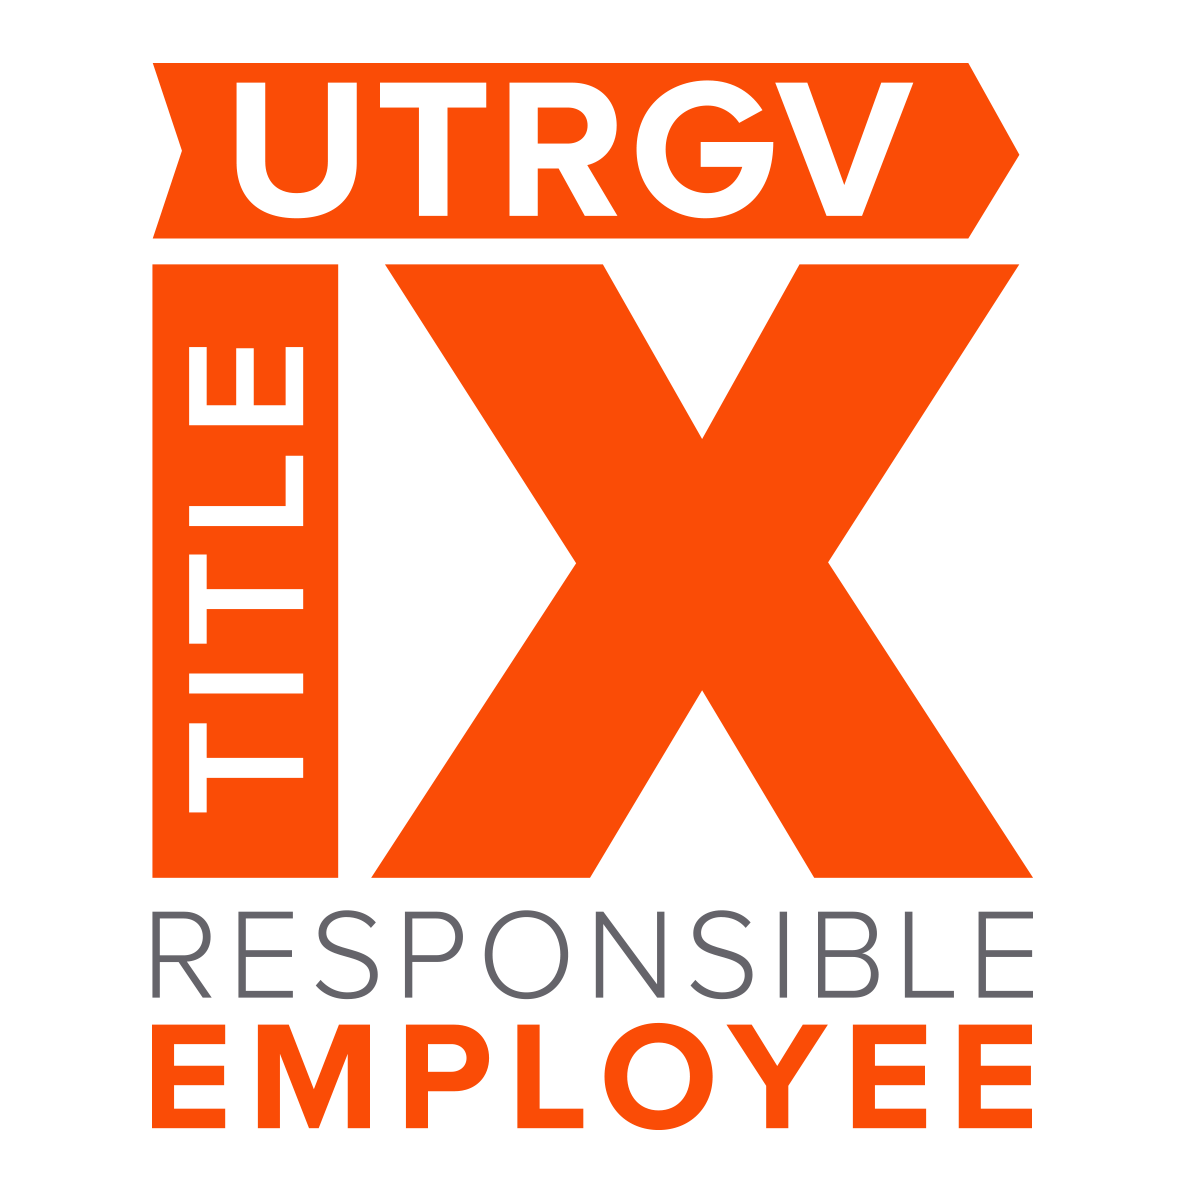 UTRGV Title IX Responsible Employee